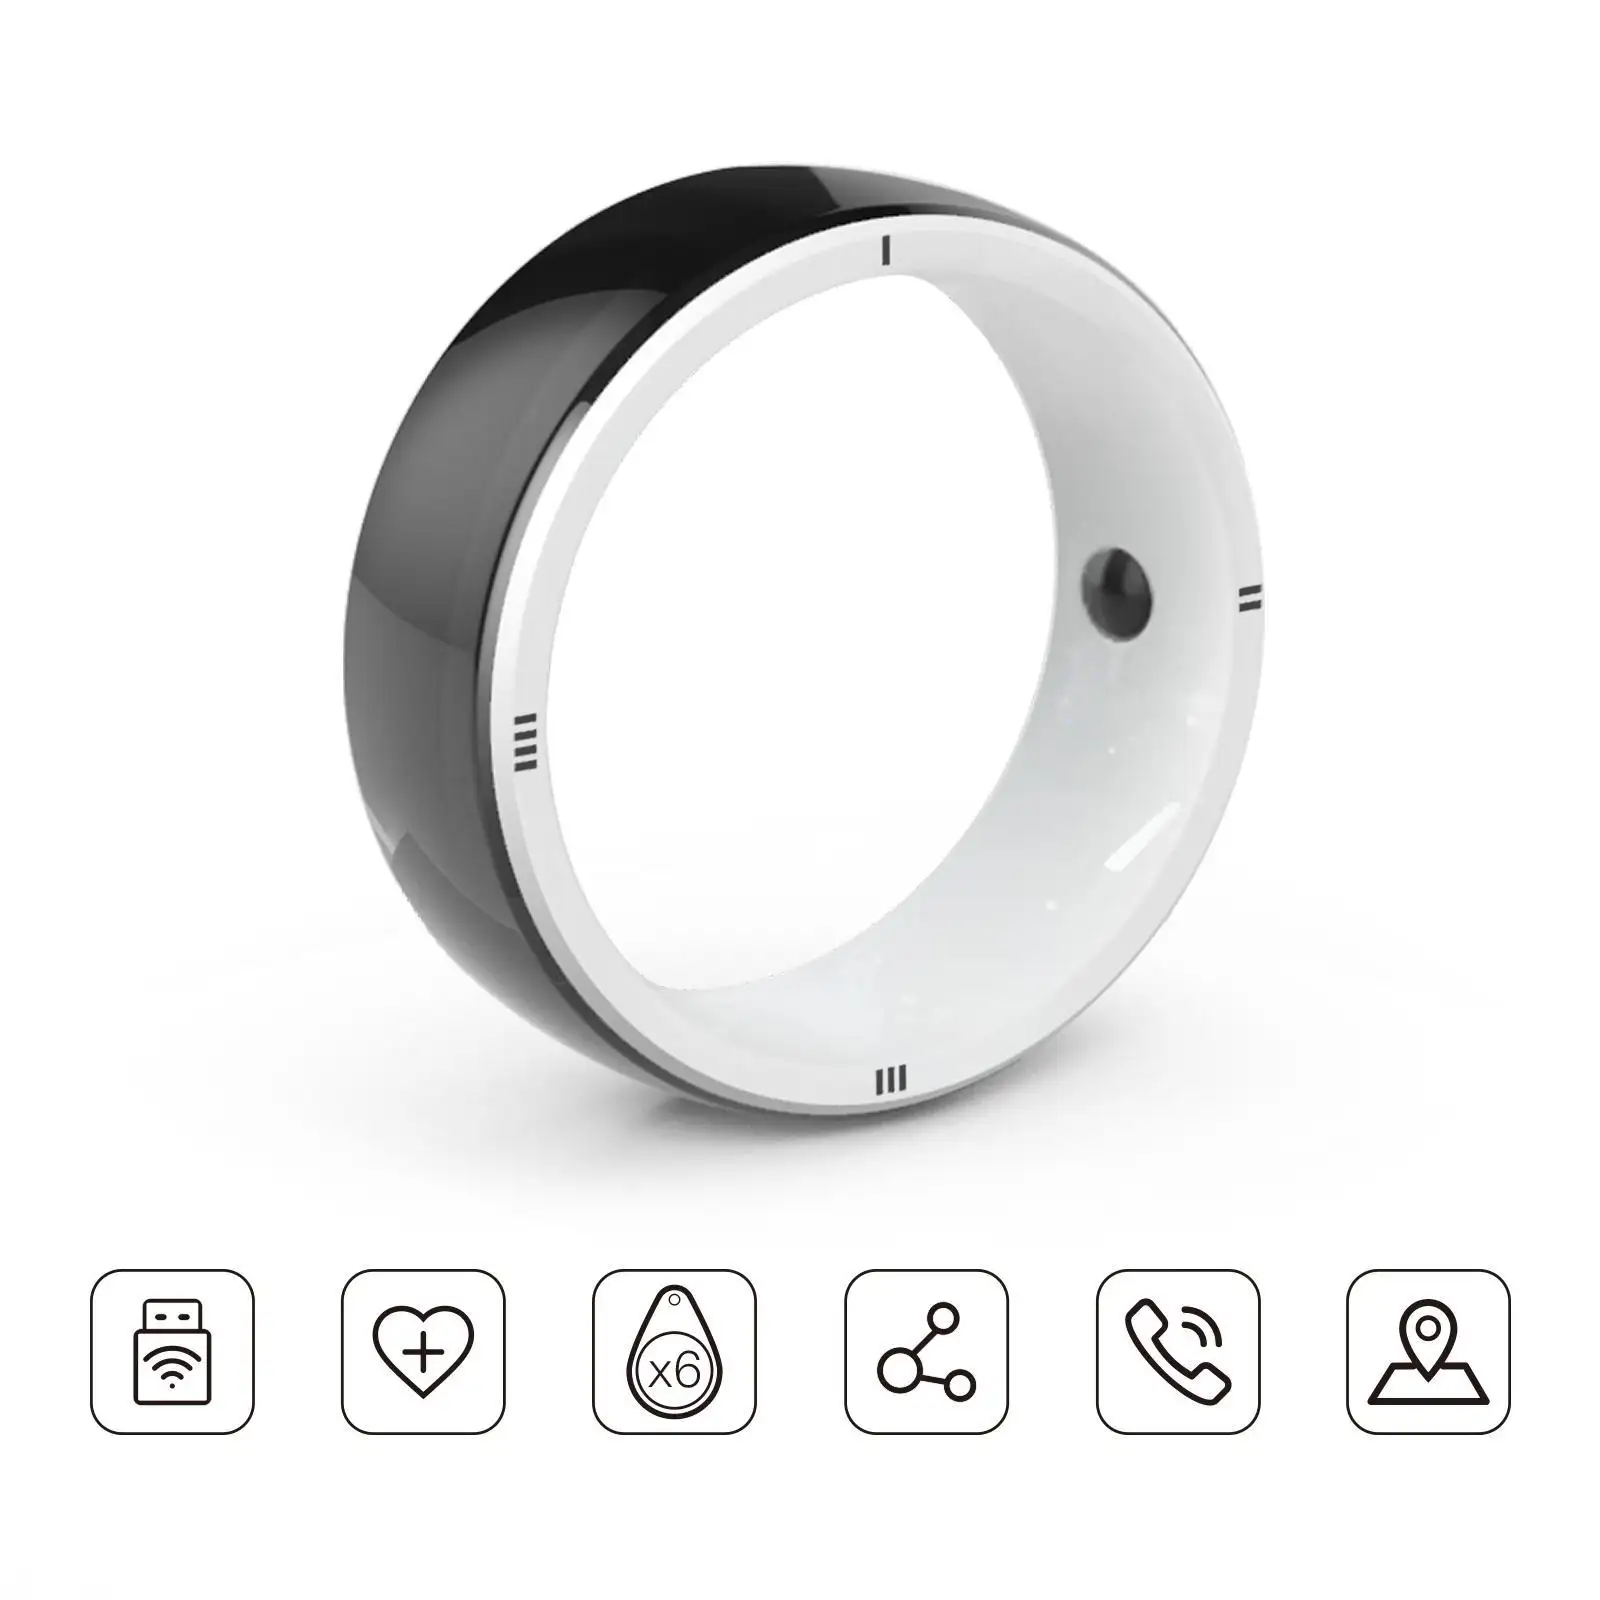 JAKCOM R5 Smart Ring New Smart Ring Match to cracked firestick usb hdd case glitter background all 4g mobile 1 watt access